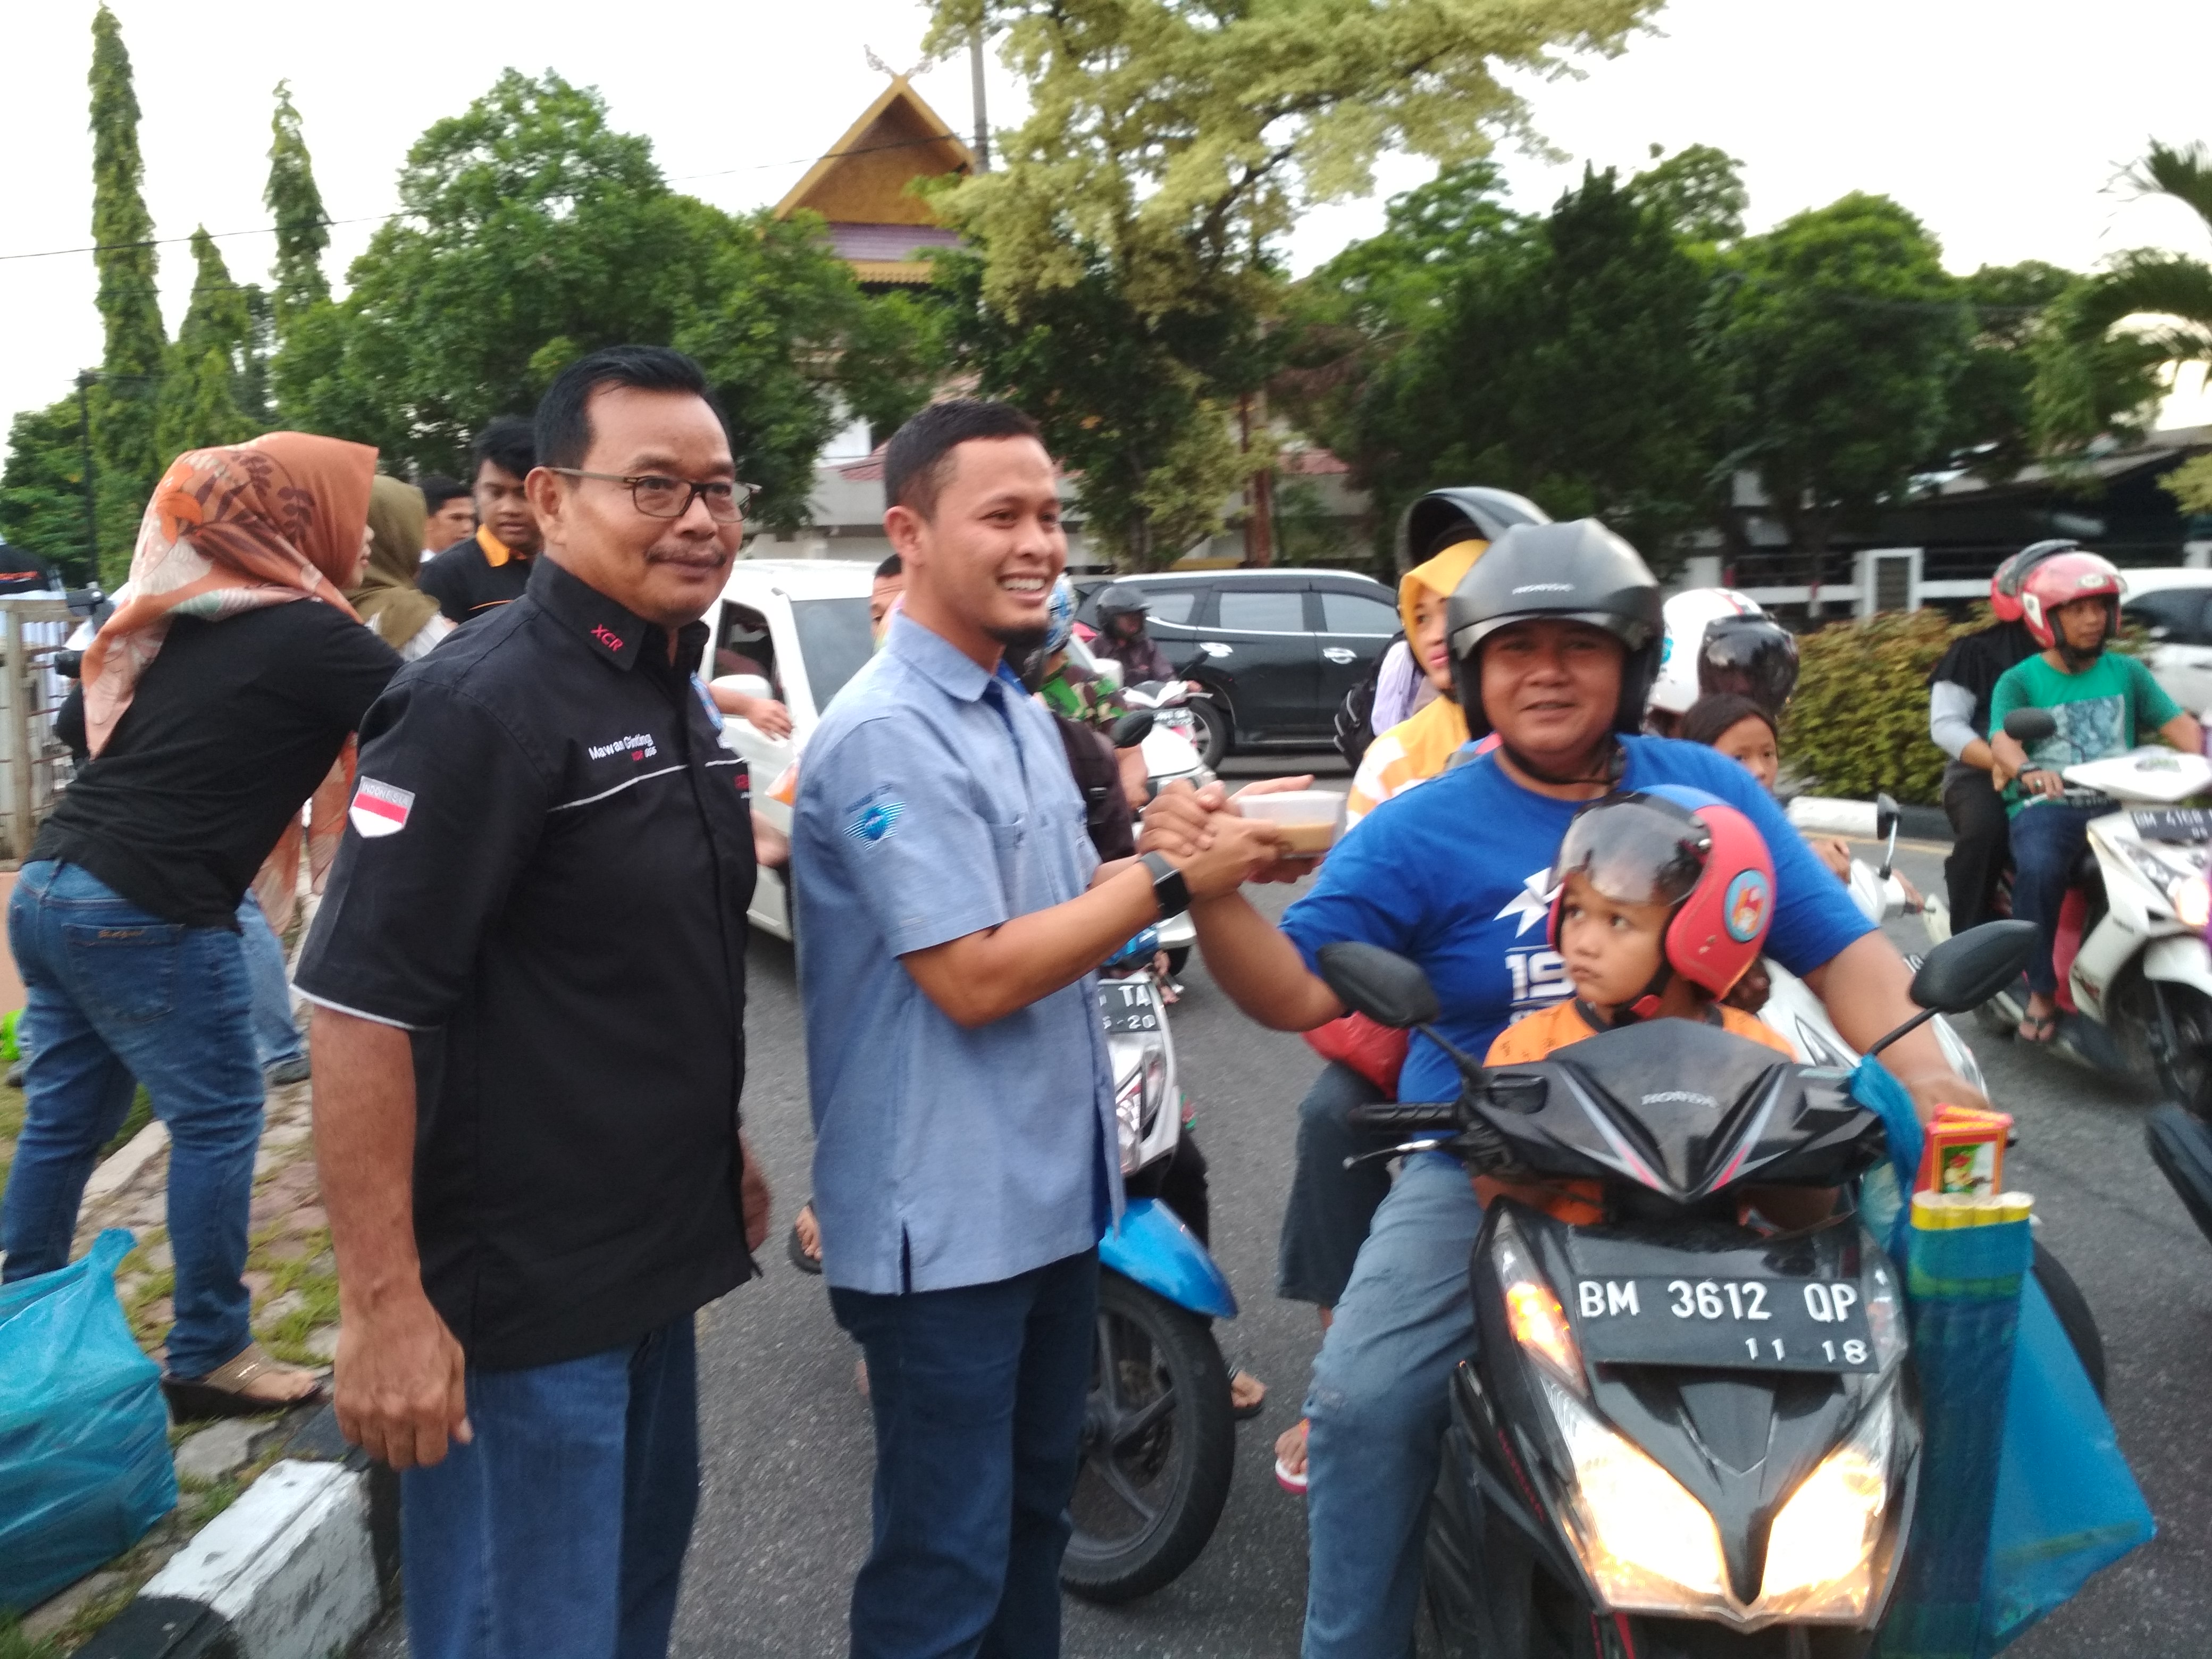 Pengprov IMI Riau Bersama Ribuan Member Komunitas Mobil Bagi-bagi Takjil di Tugu Keris Pekanbaru